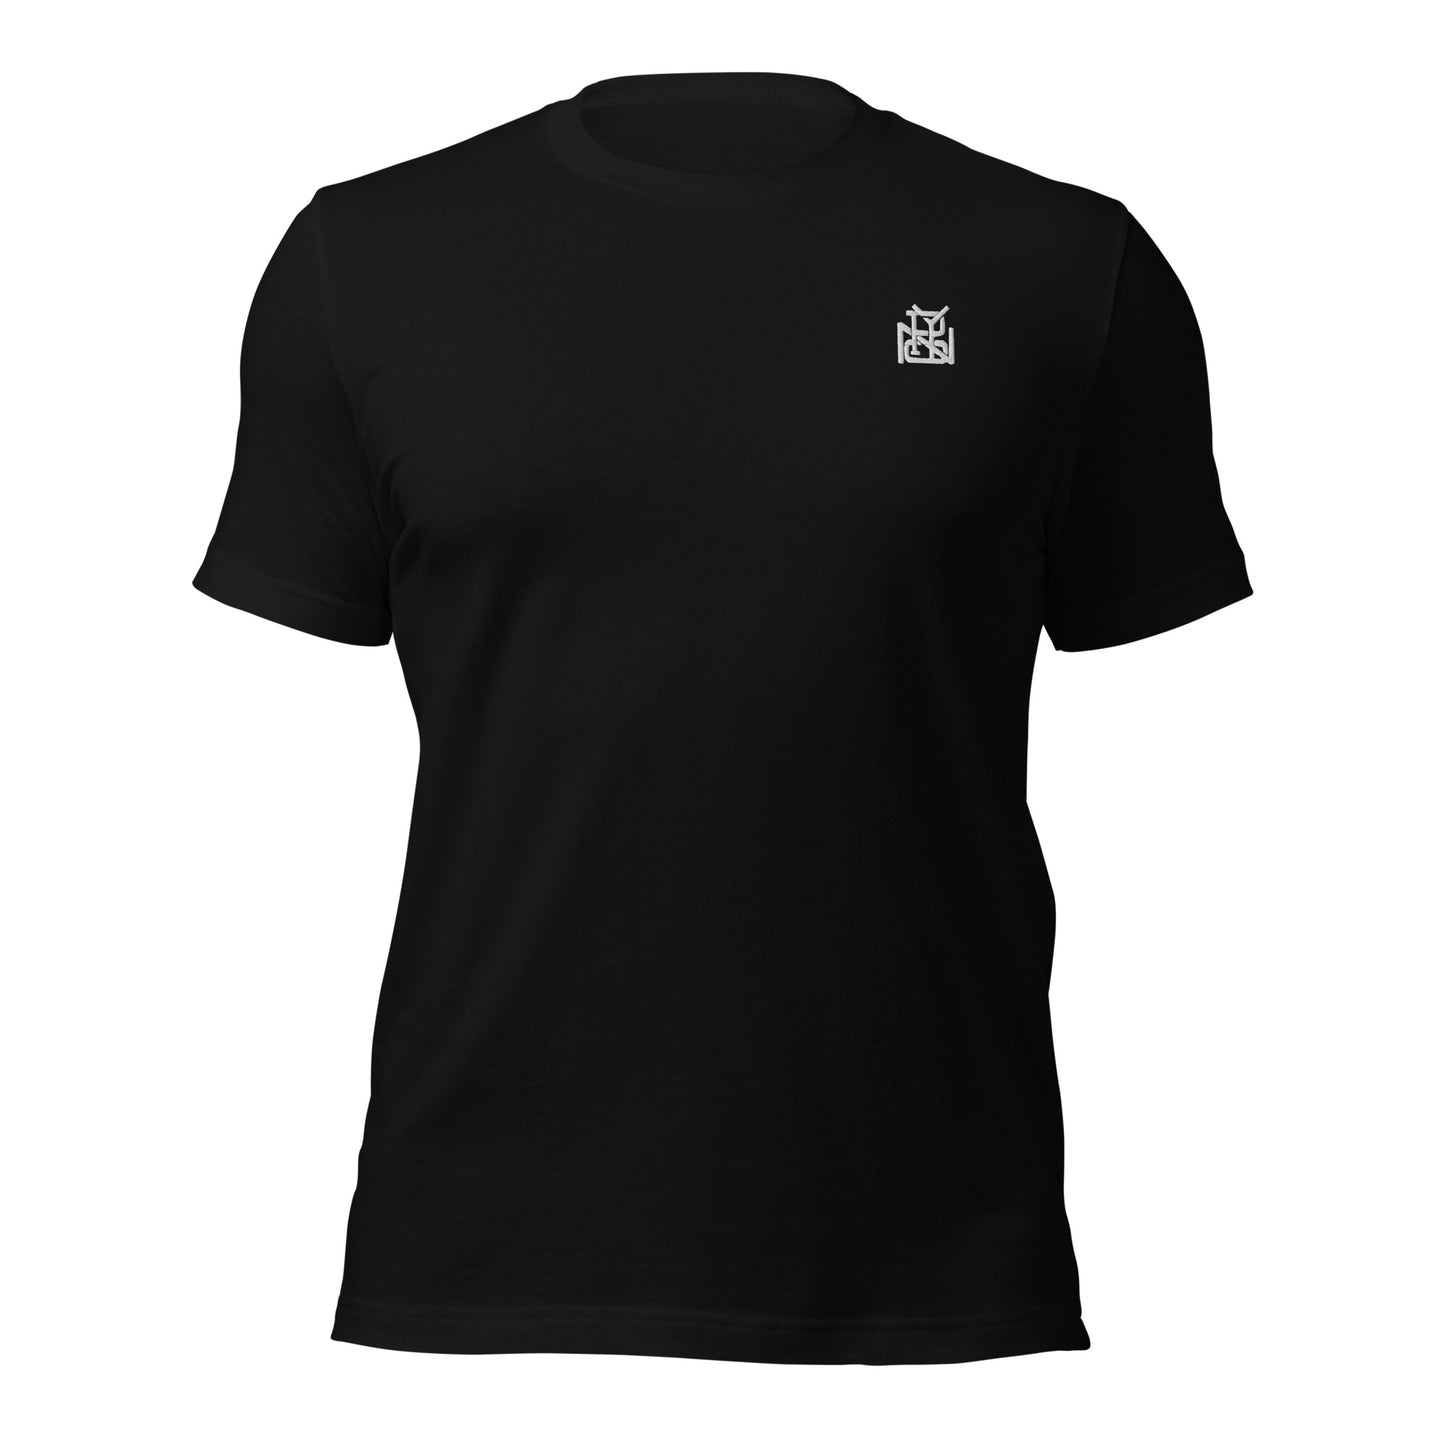 PoNY Monogram T-shirt [VARIOUS COLORS]